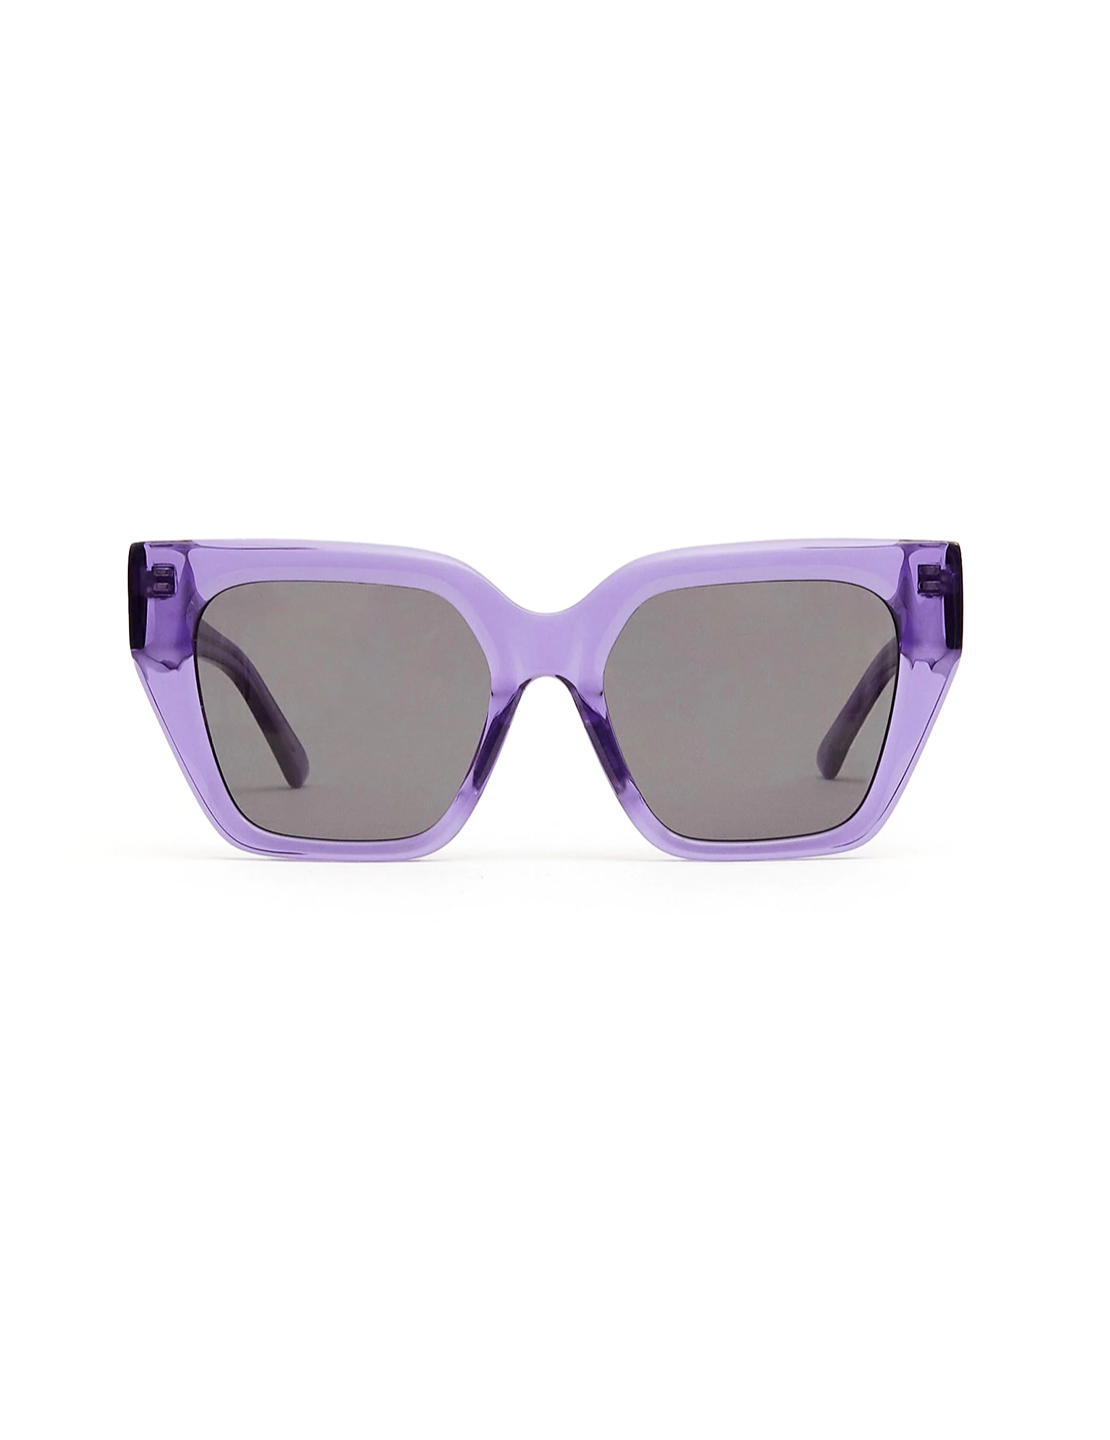 Clare V - Heather sunglasses iris